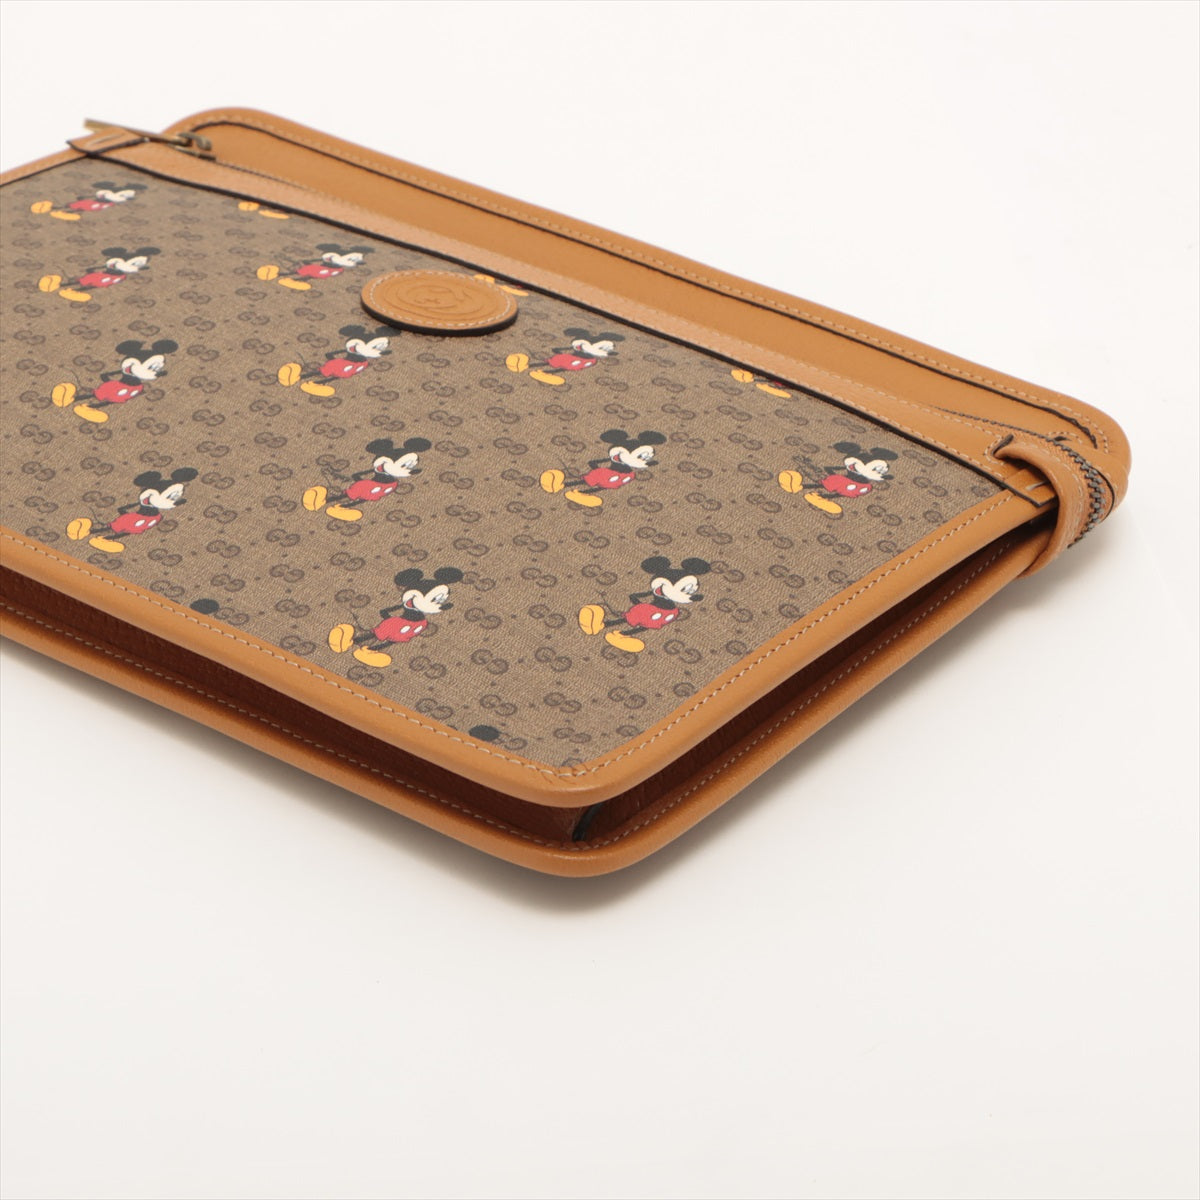 Gucci x Disney Mini GG Supreme Clutch bag Brown 602552